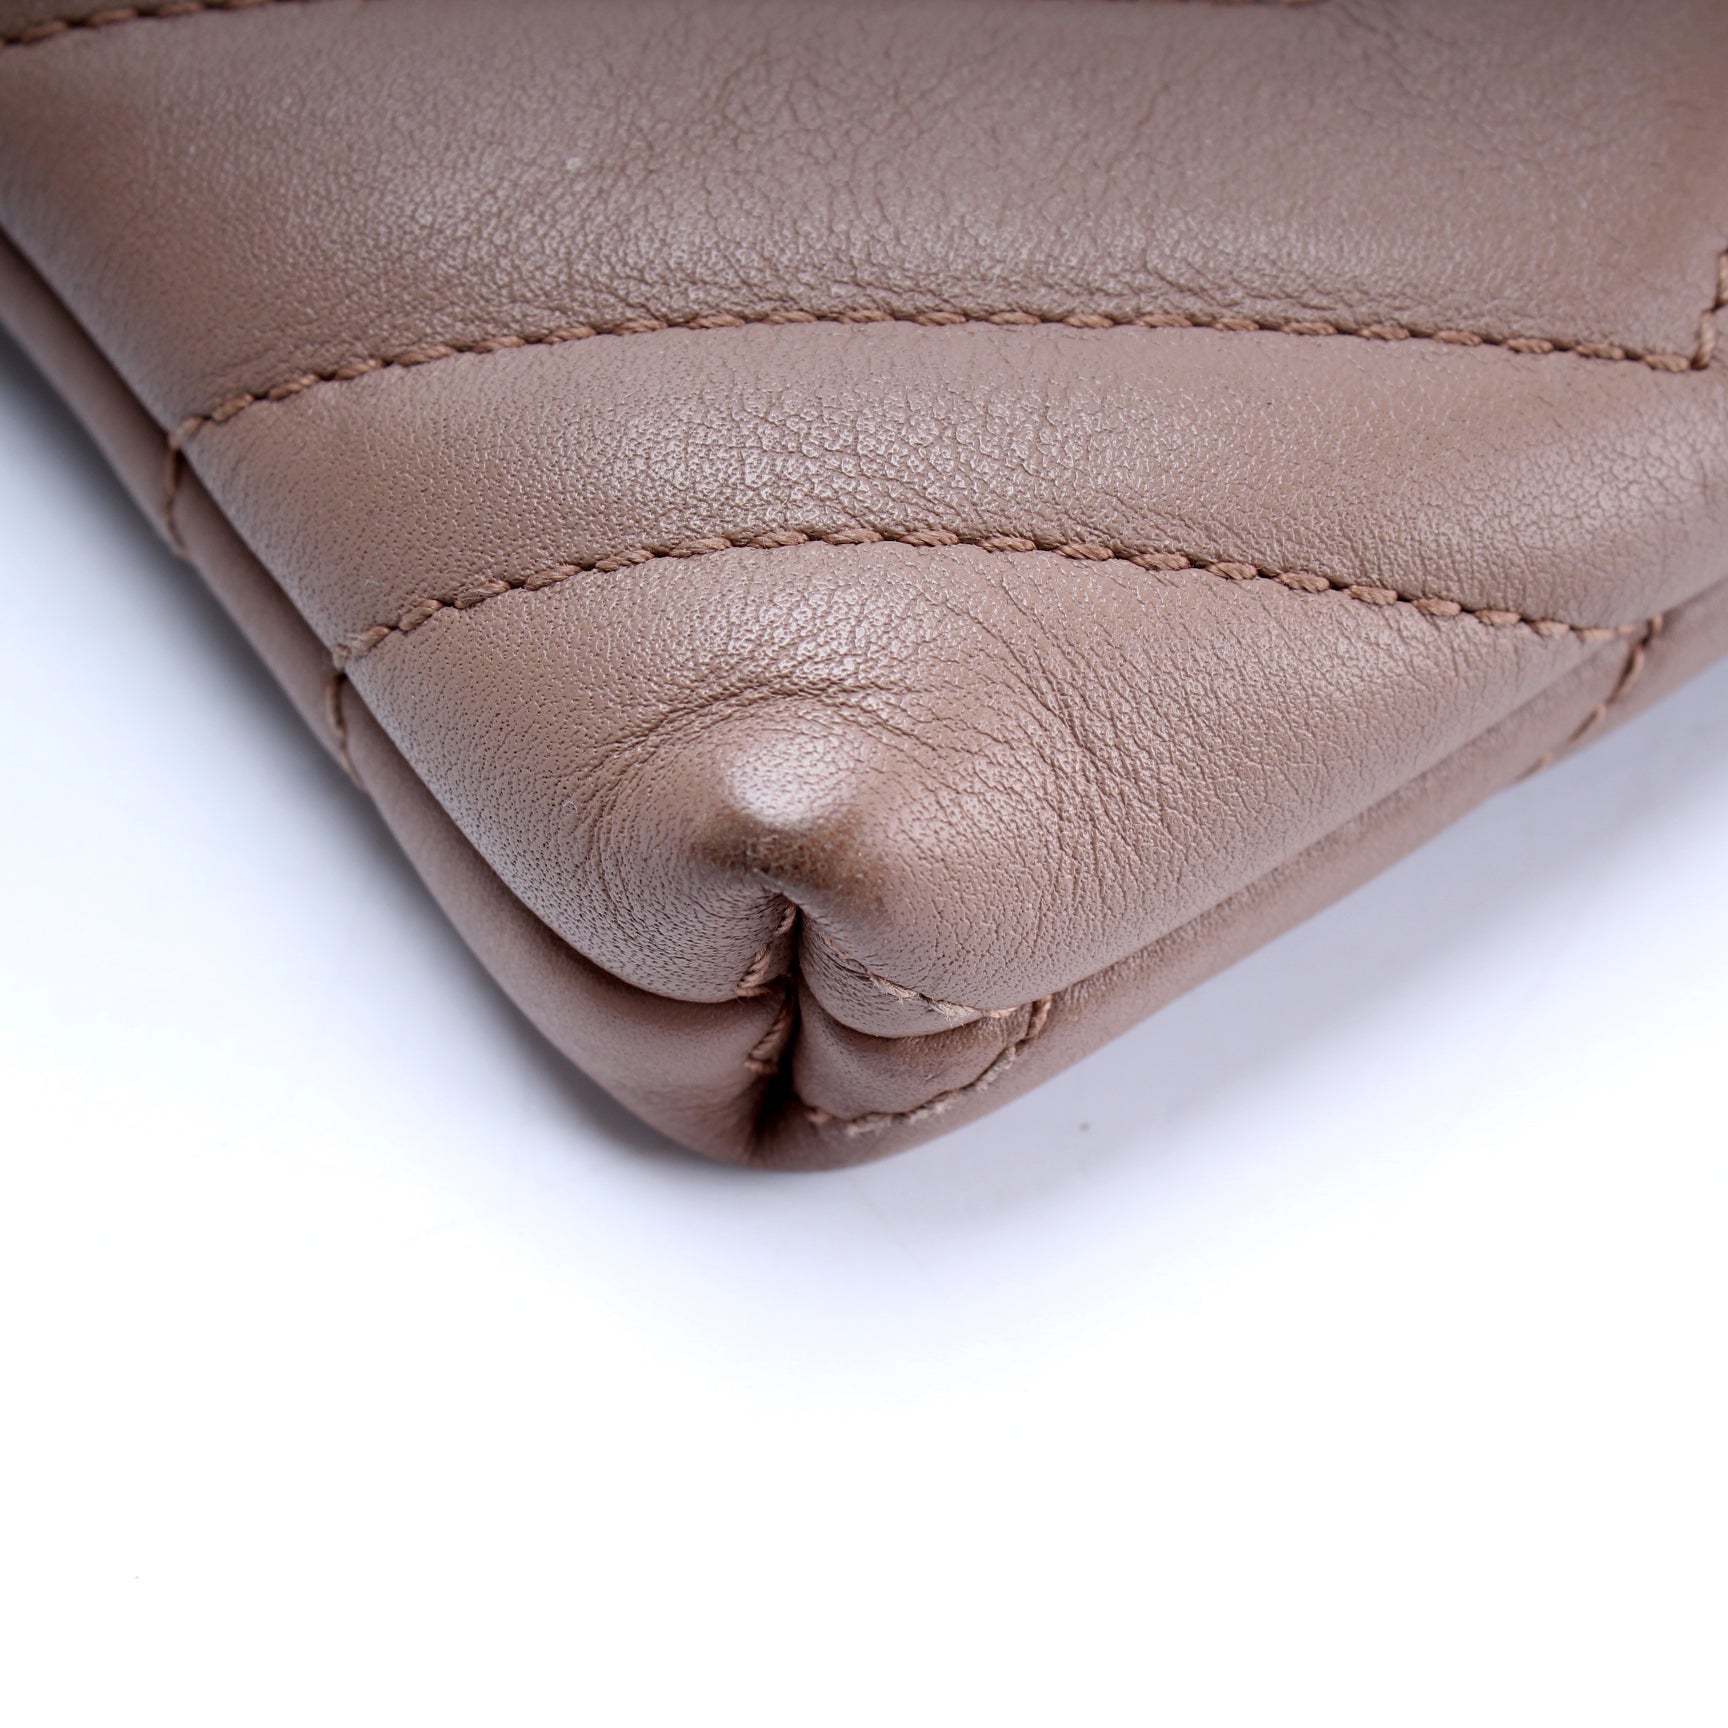 443447 Marmont Mini Chain Bag – Keeks Designer Handbags